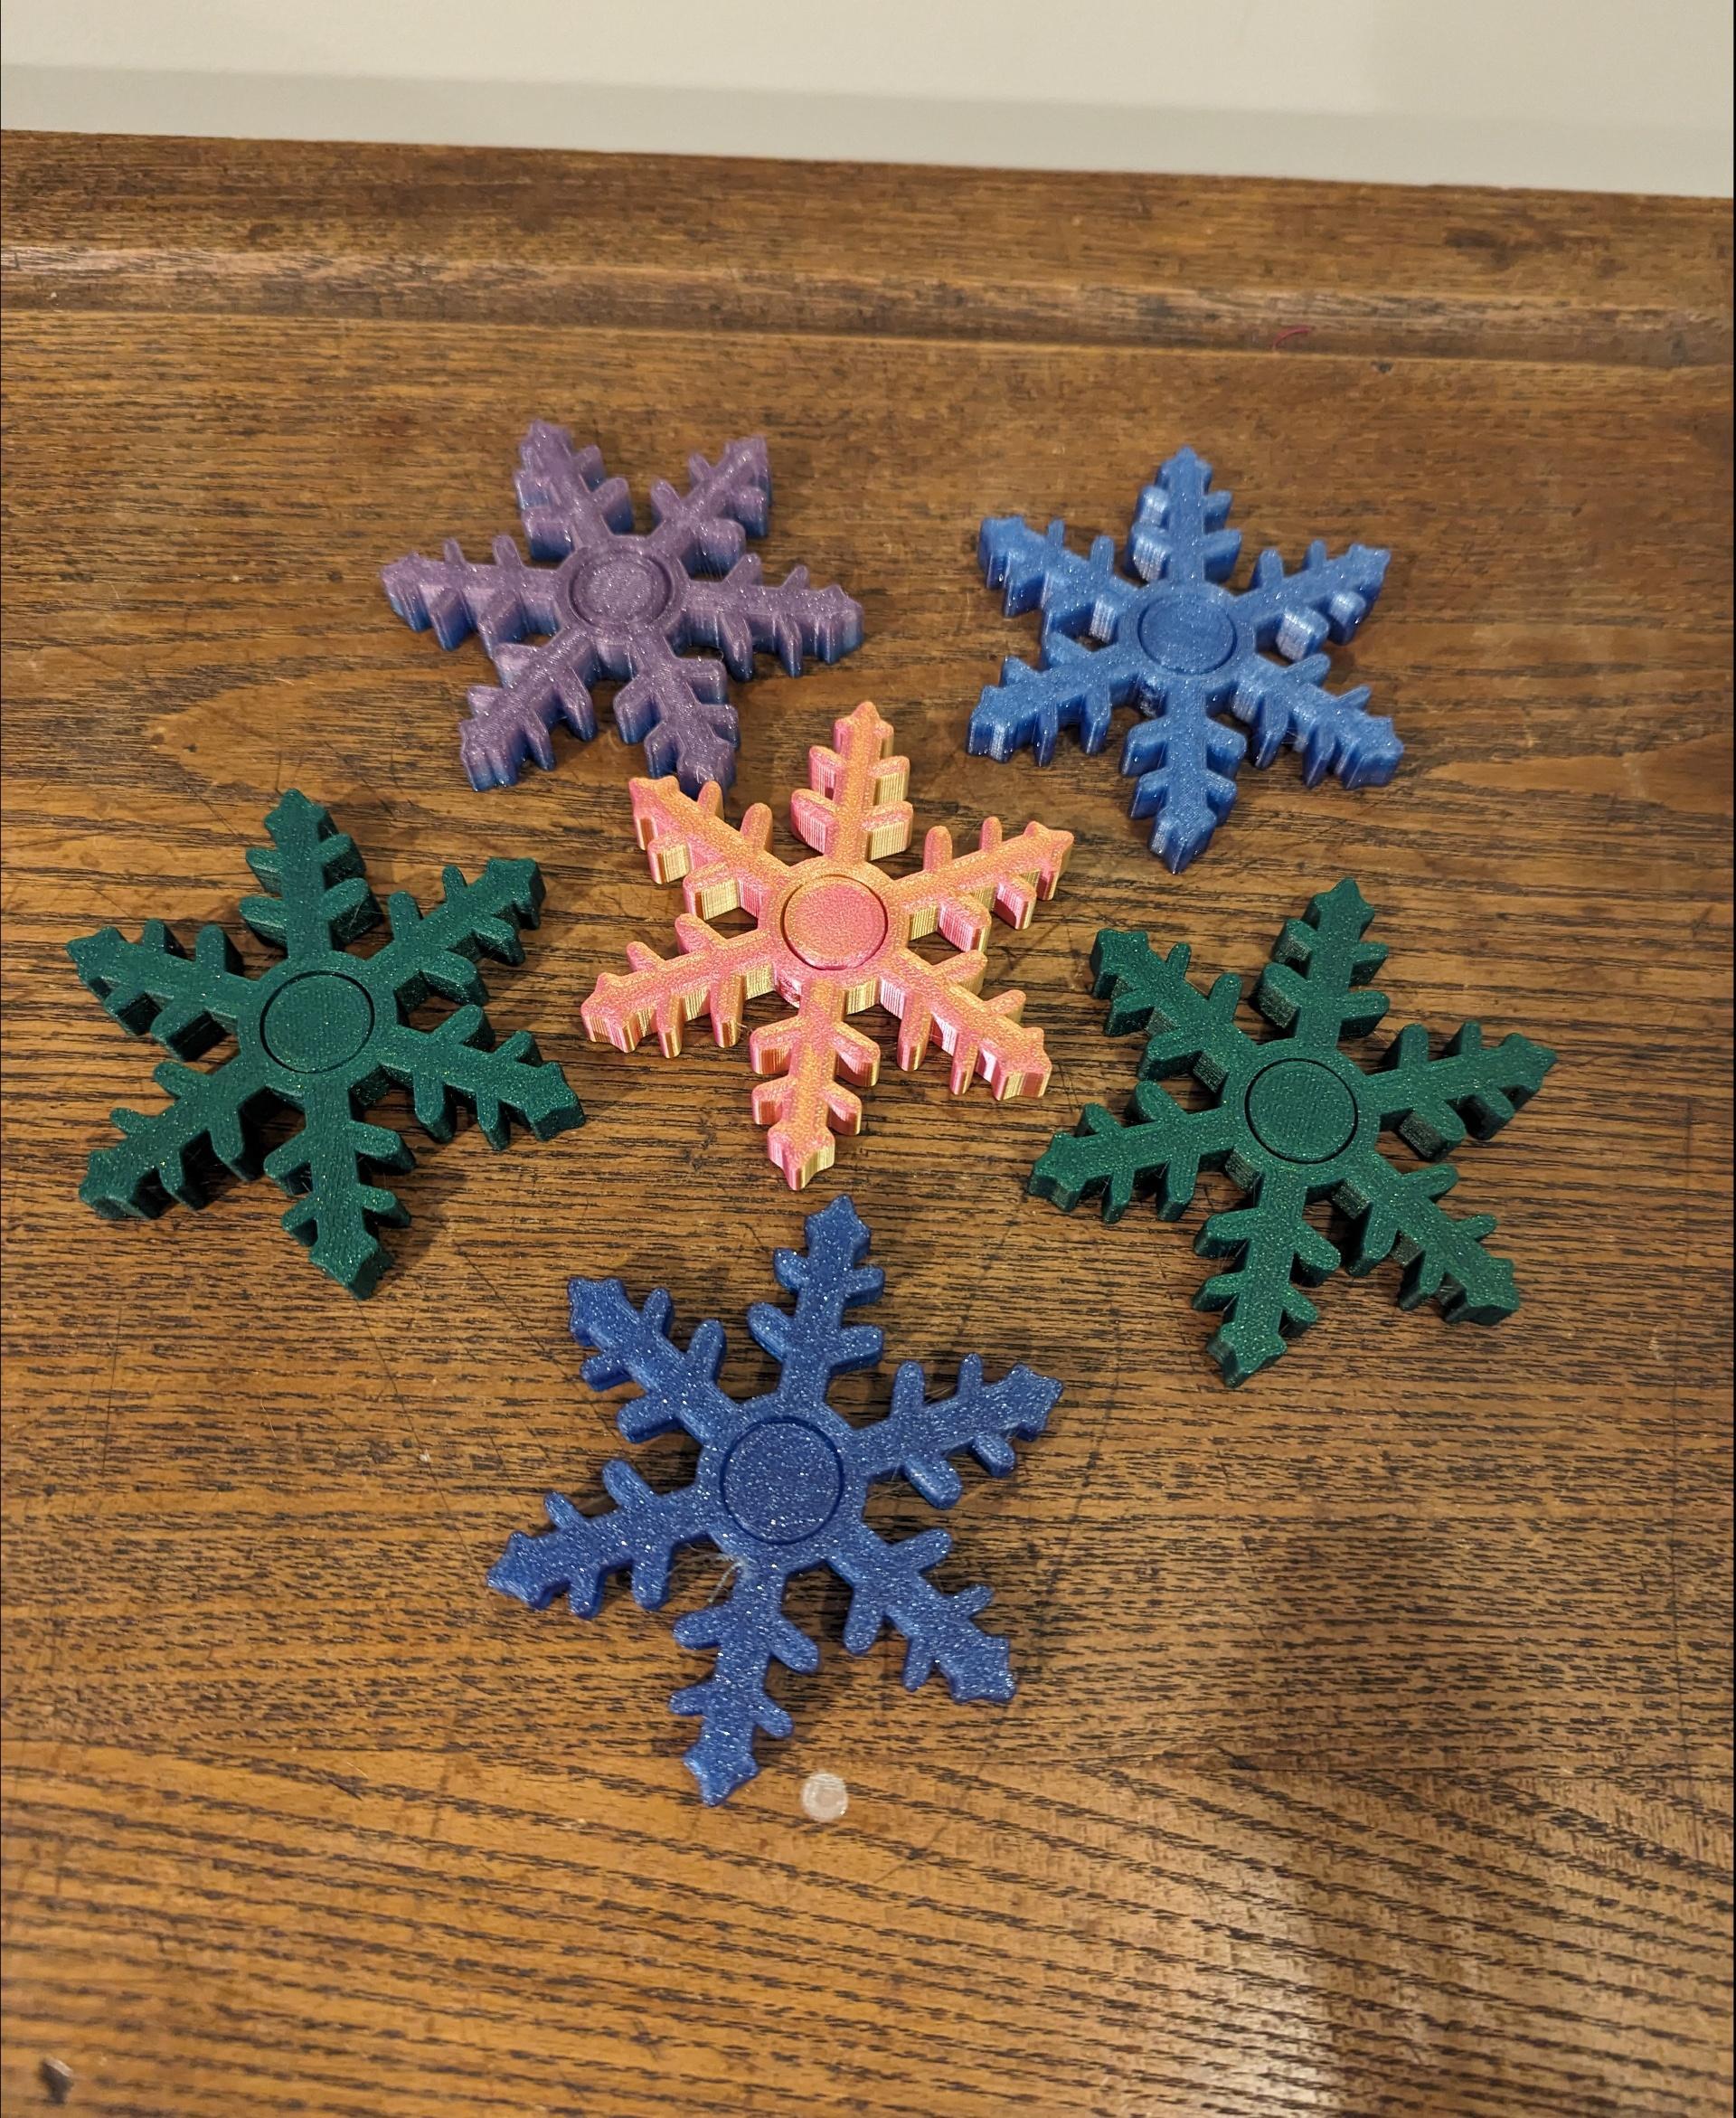 Snowflake Fidget Spinner (Classic) - Printed in
@Proto_pasta OG Nebula, Cloverleaf Metallic Green, and some @aceaddity Gold RoseRed - 3d model